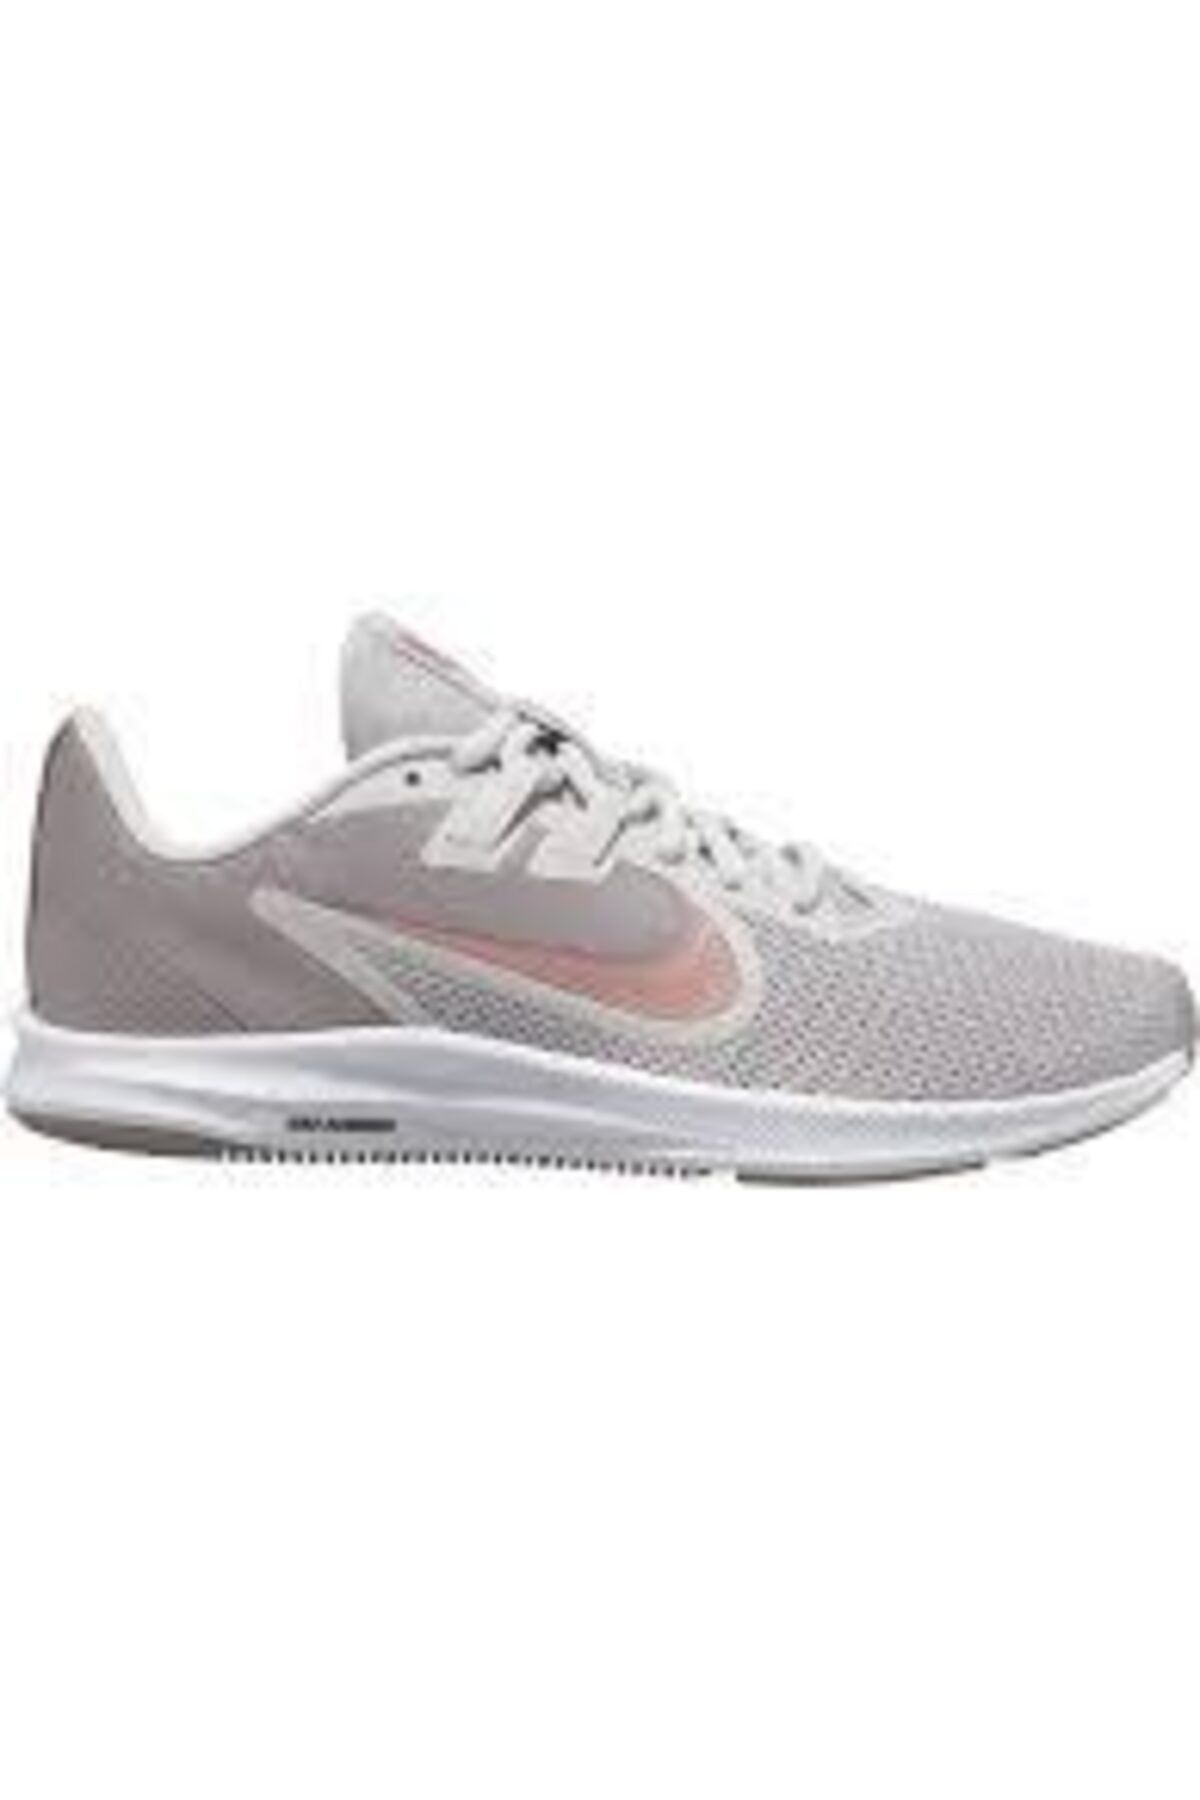 Nike Downshifter 9 Erkek Koşu Ayakkabısı Aq7486-008